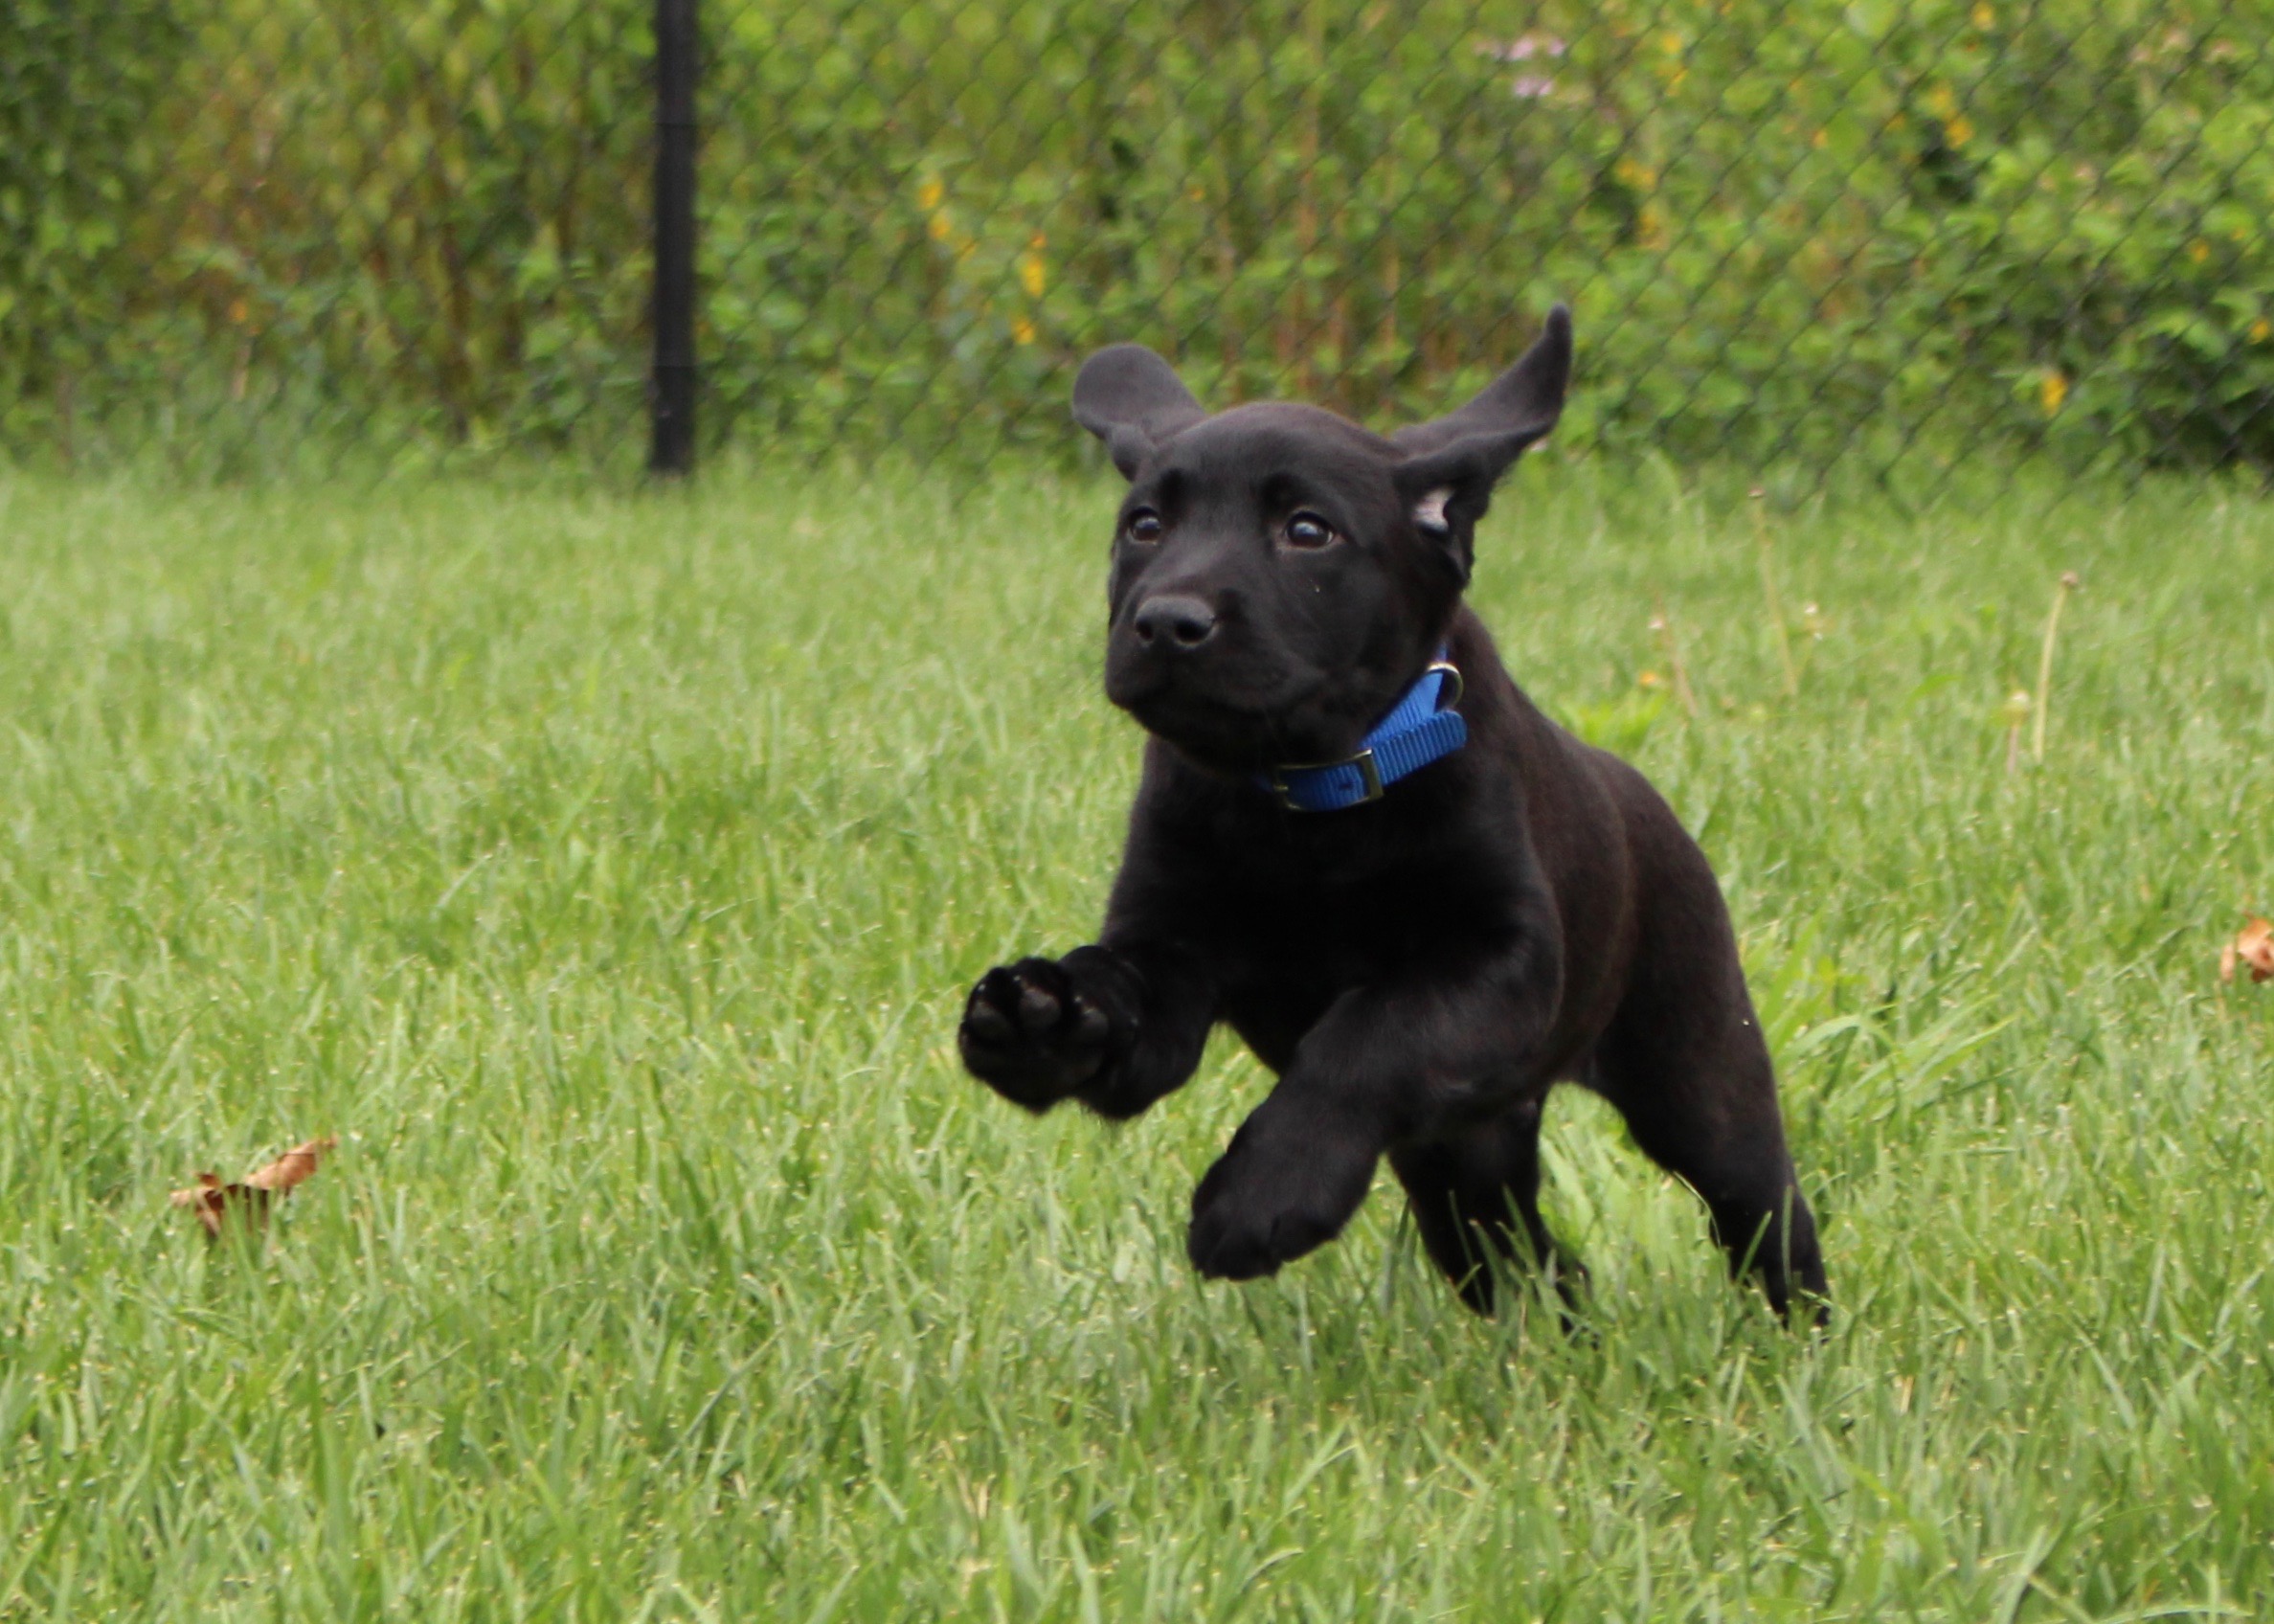 Puppy running through grass. 